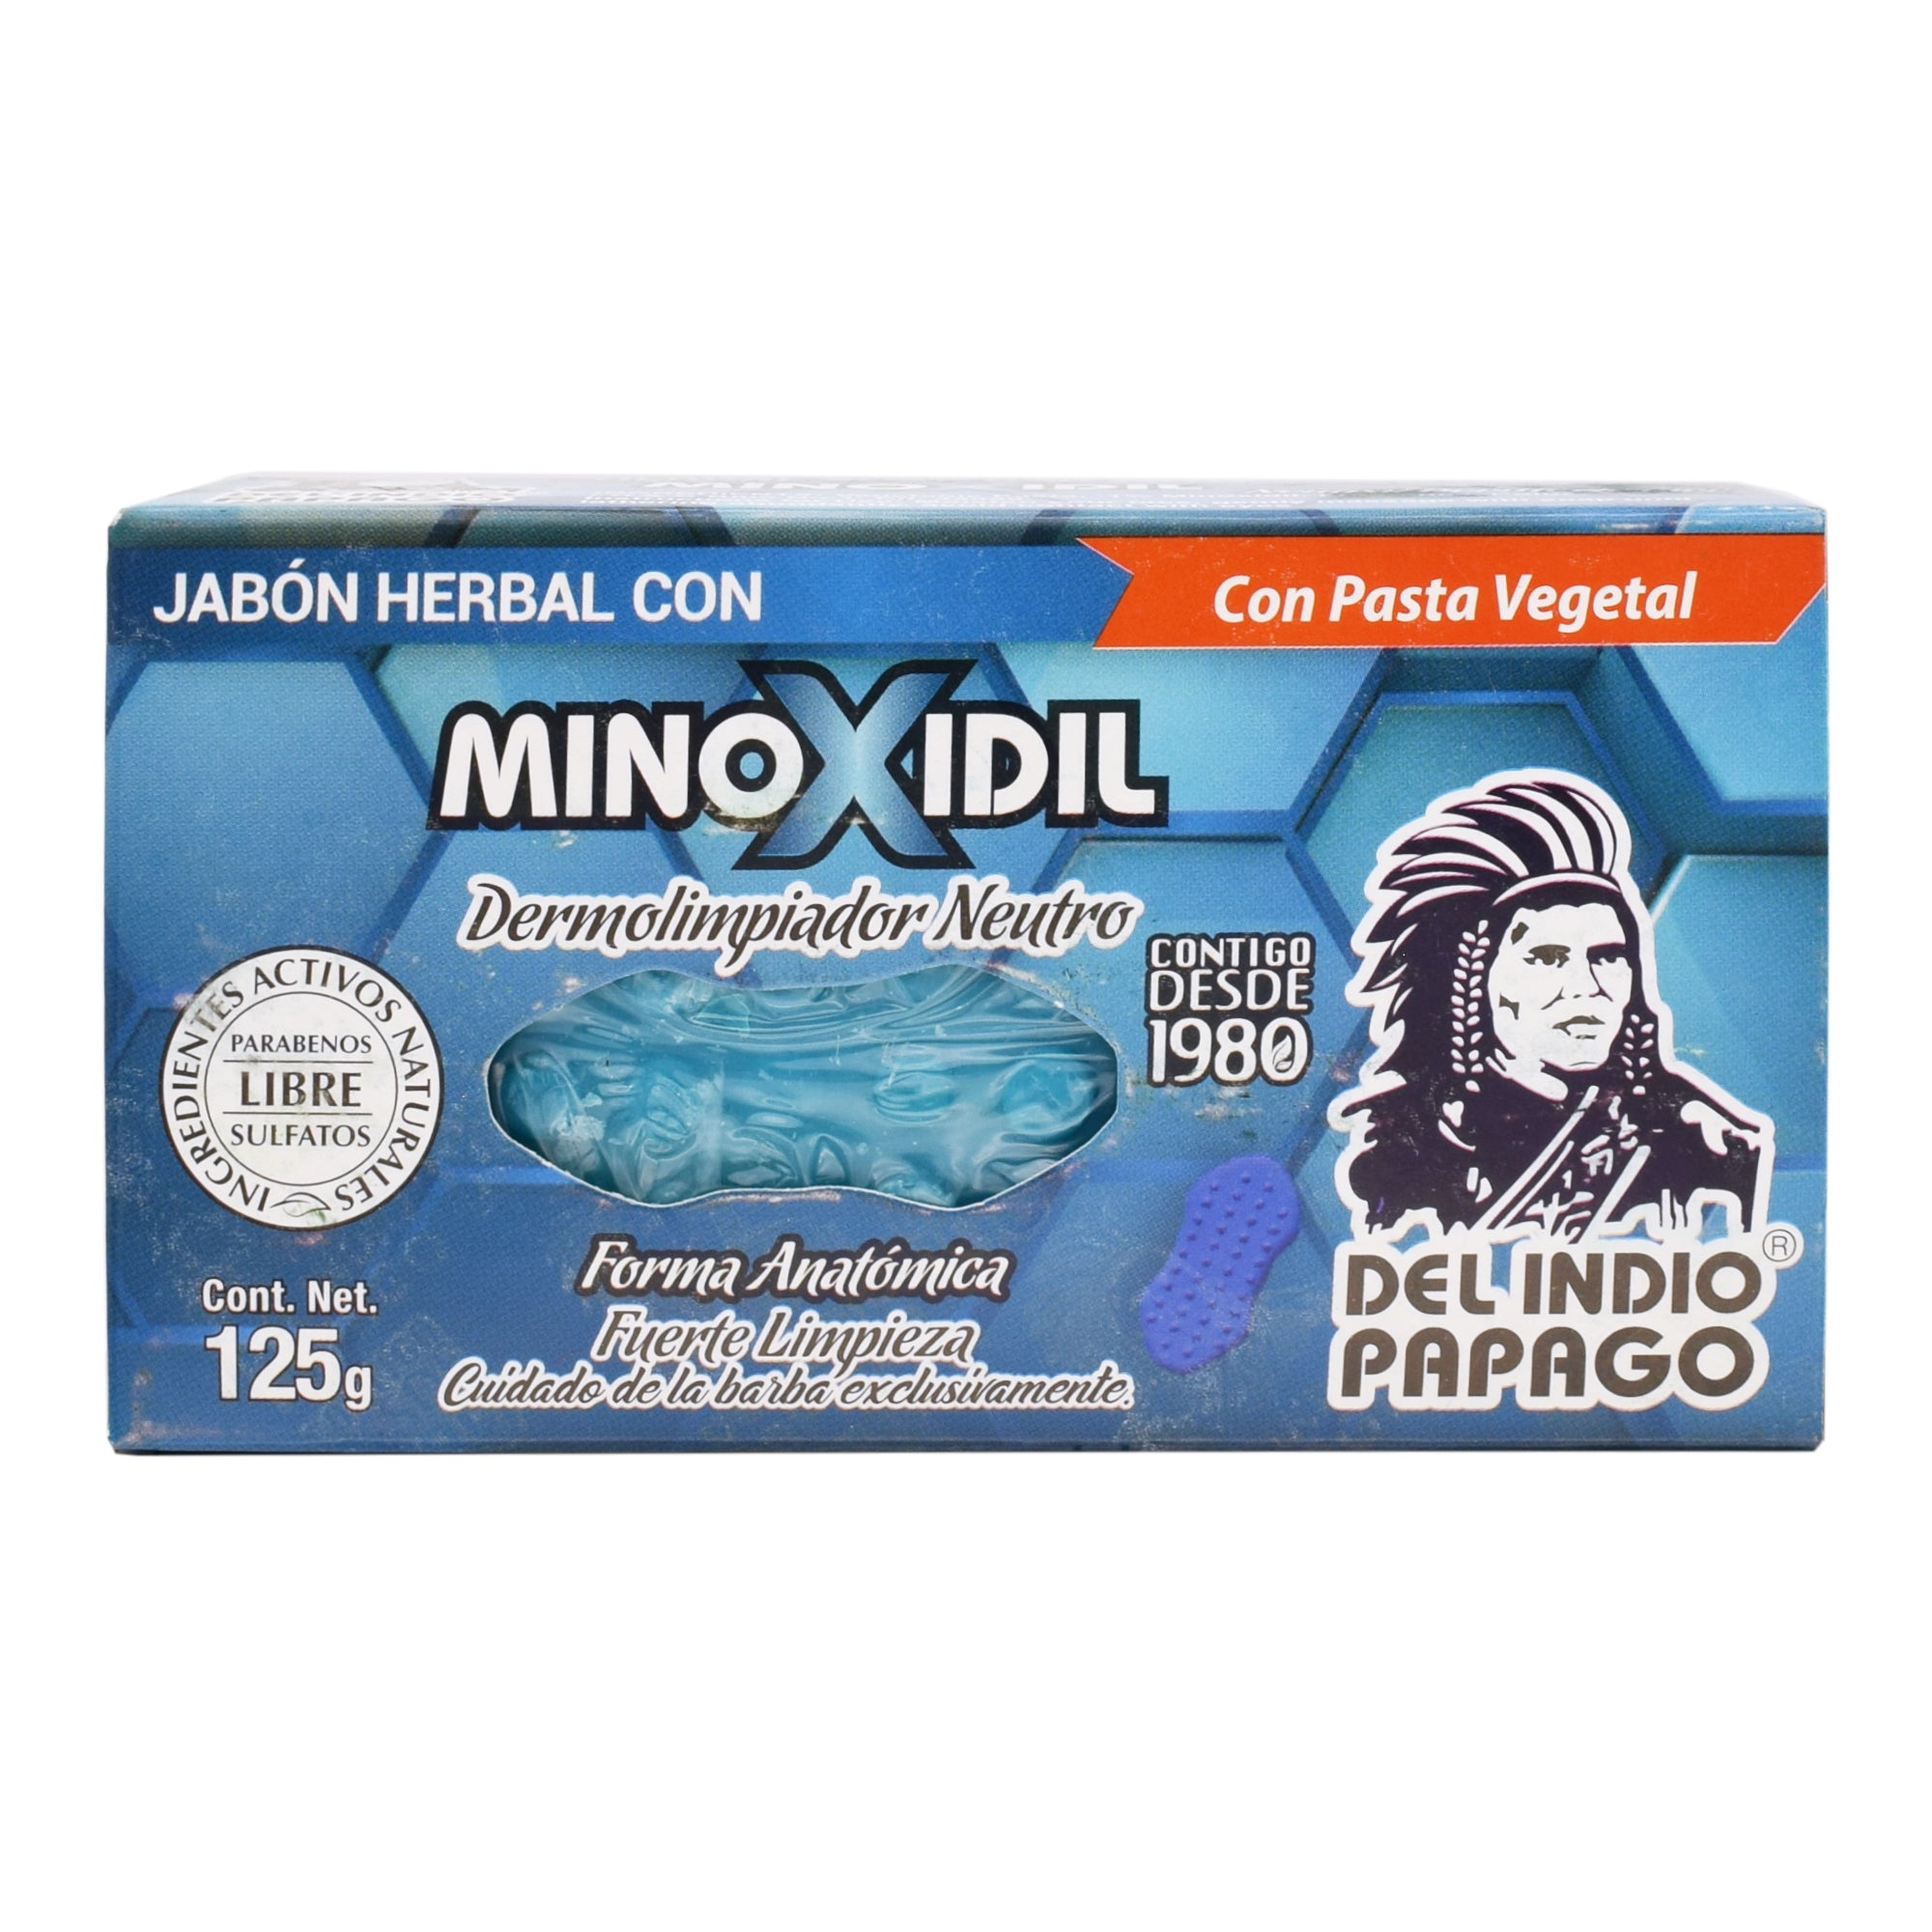 Jabon con minoxidil 125 g